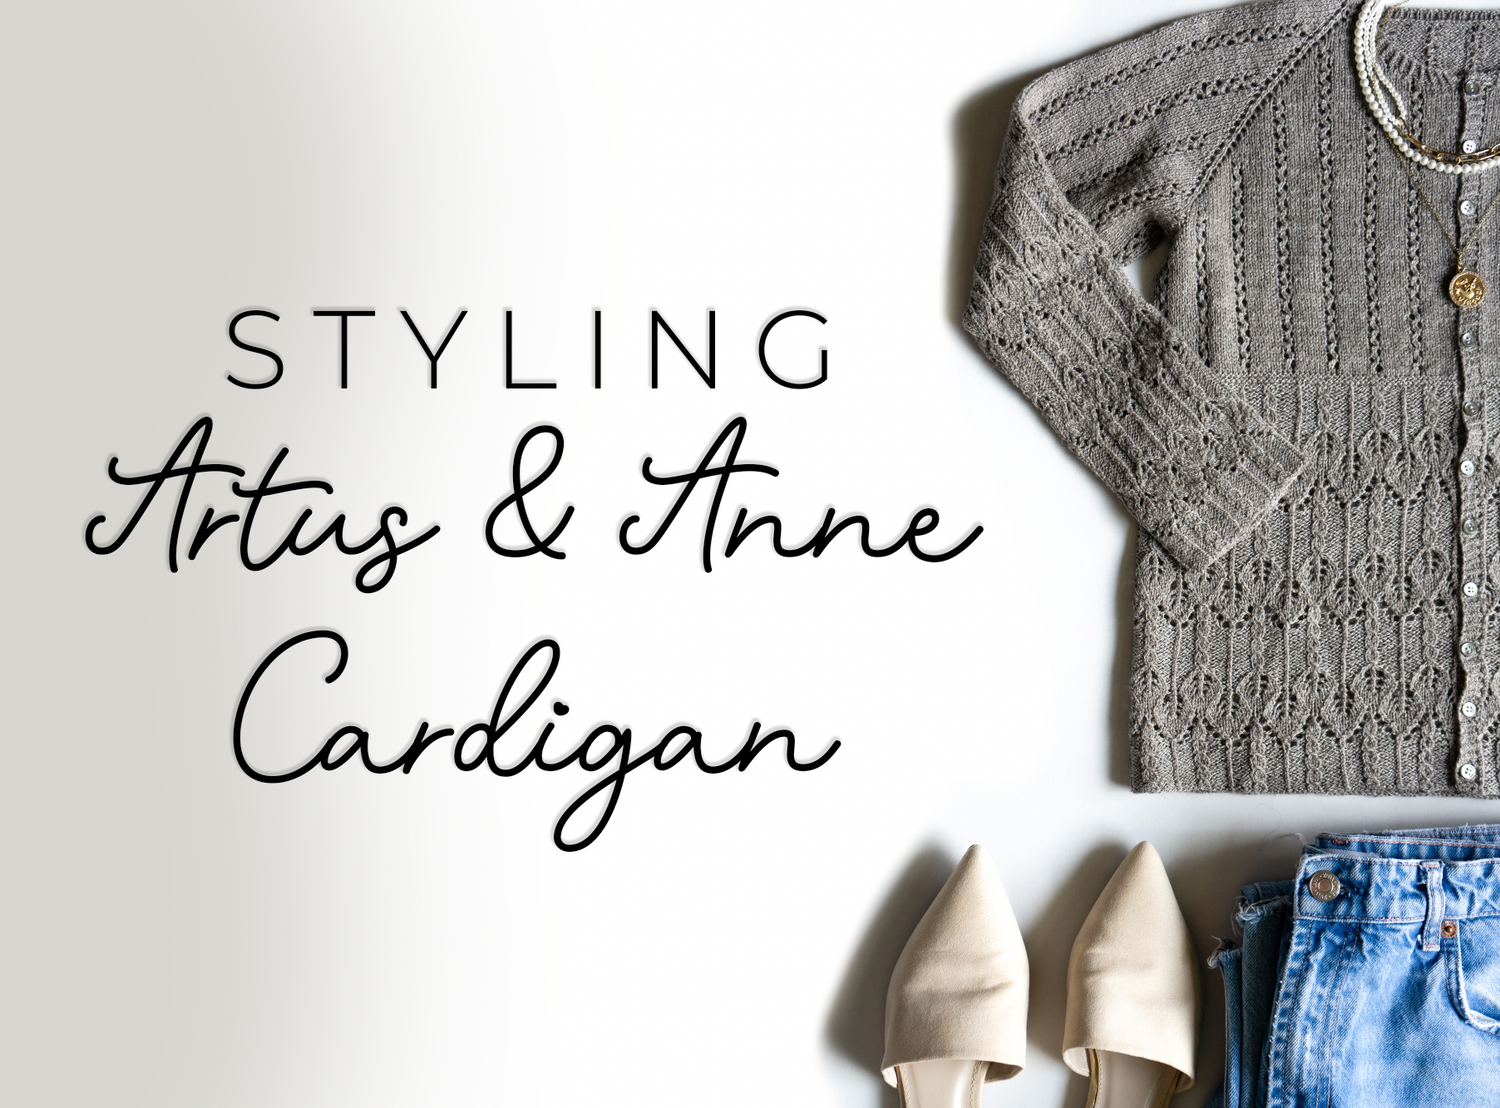 Styling Artus & Anne Cardigan